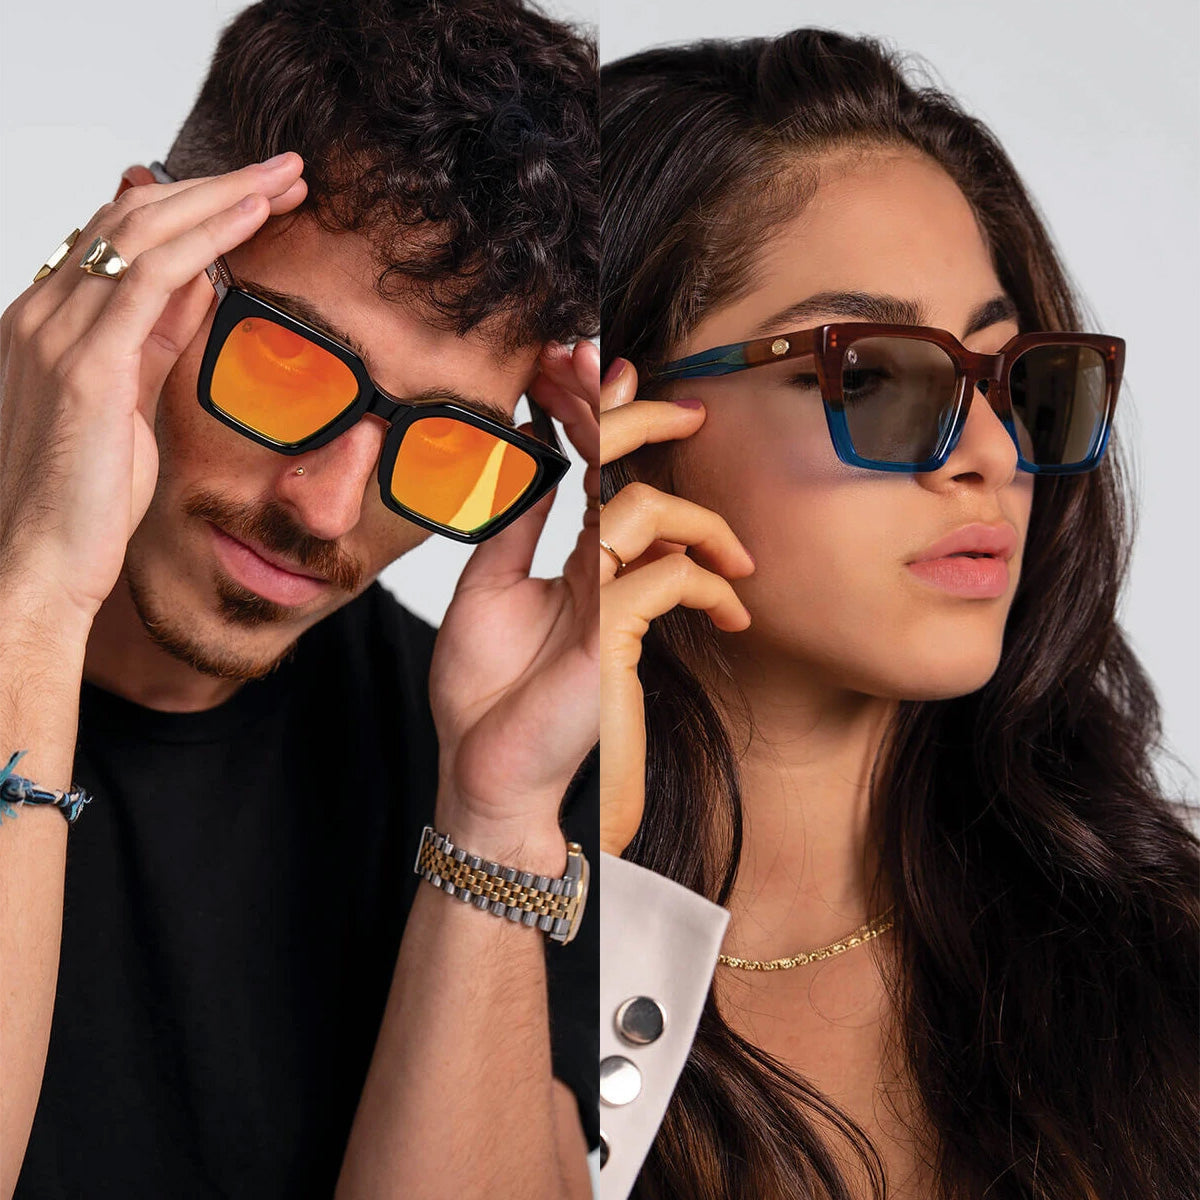 Buy T Henri Turbo Volt | Sunglasses Frame | Authorized Dealer Adair Eyewear